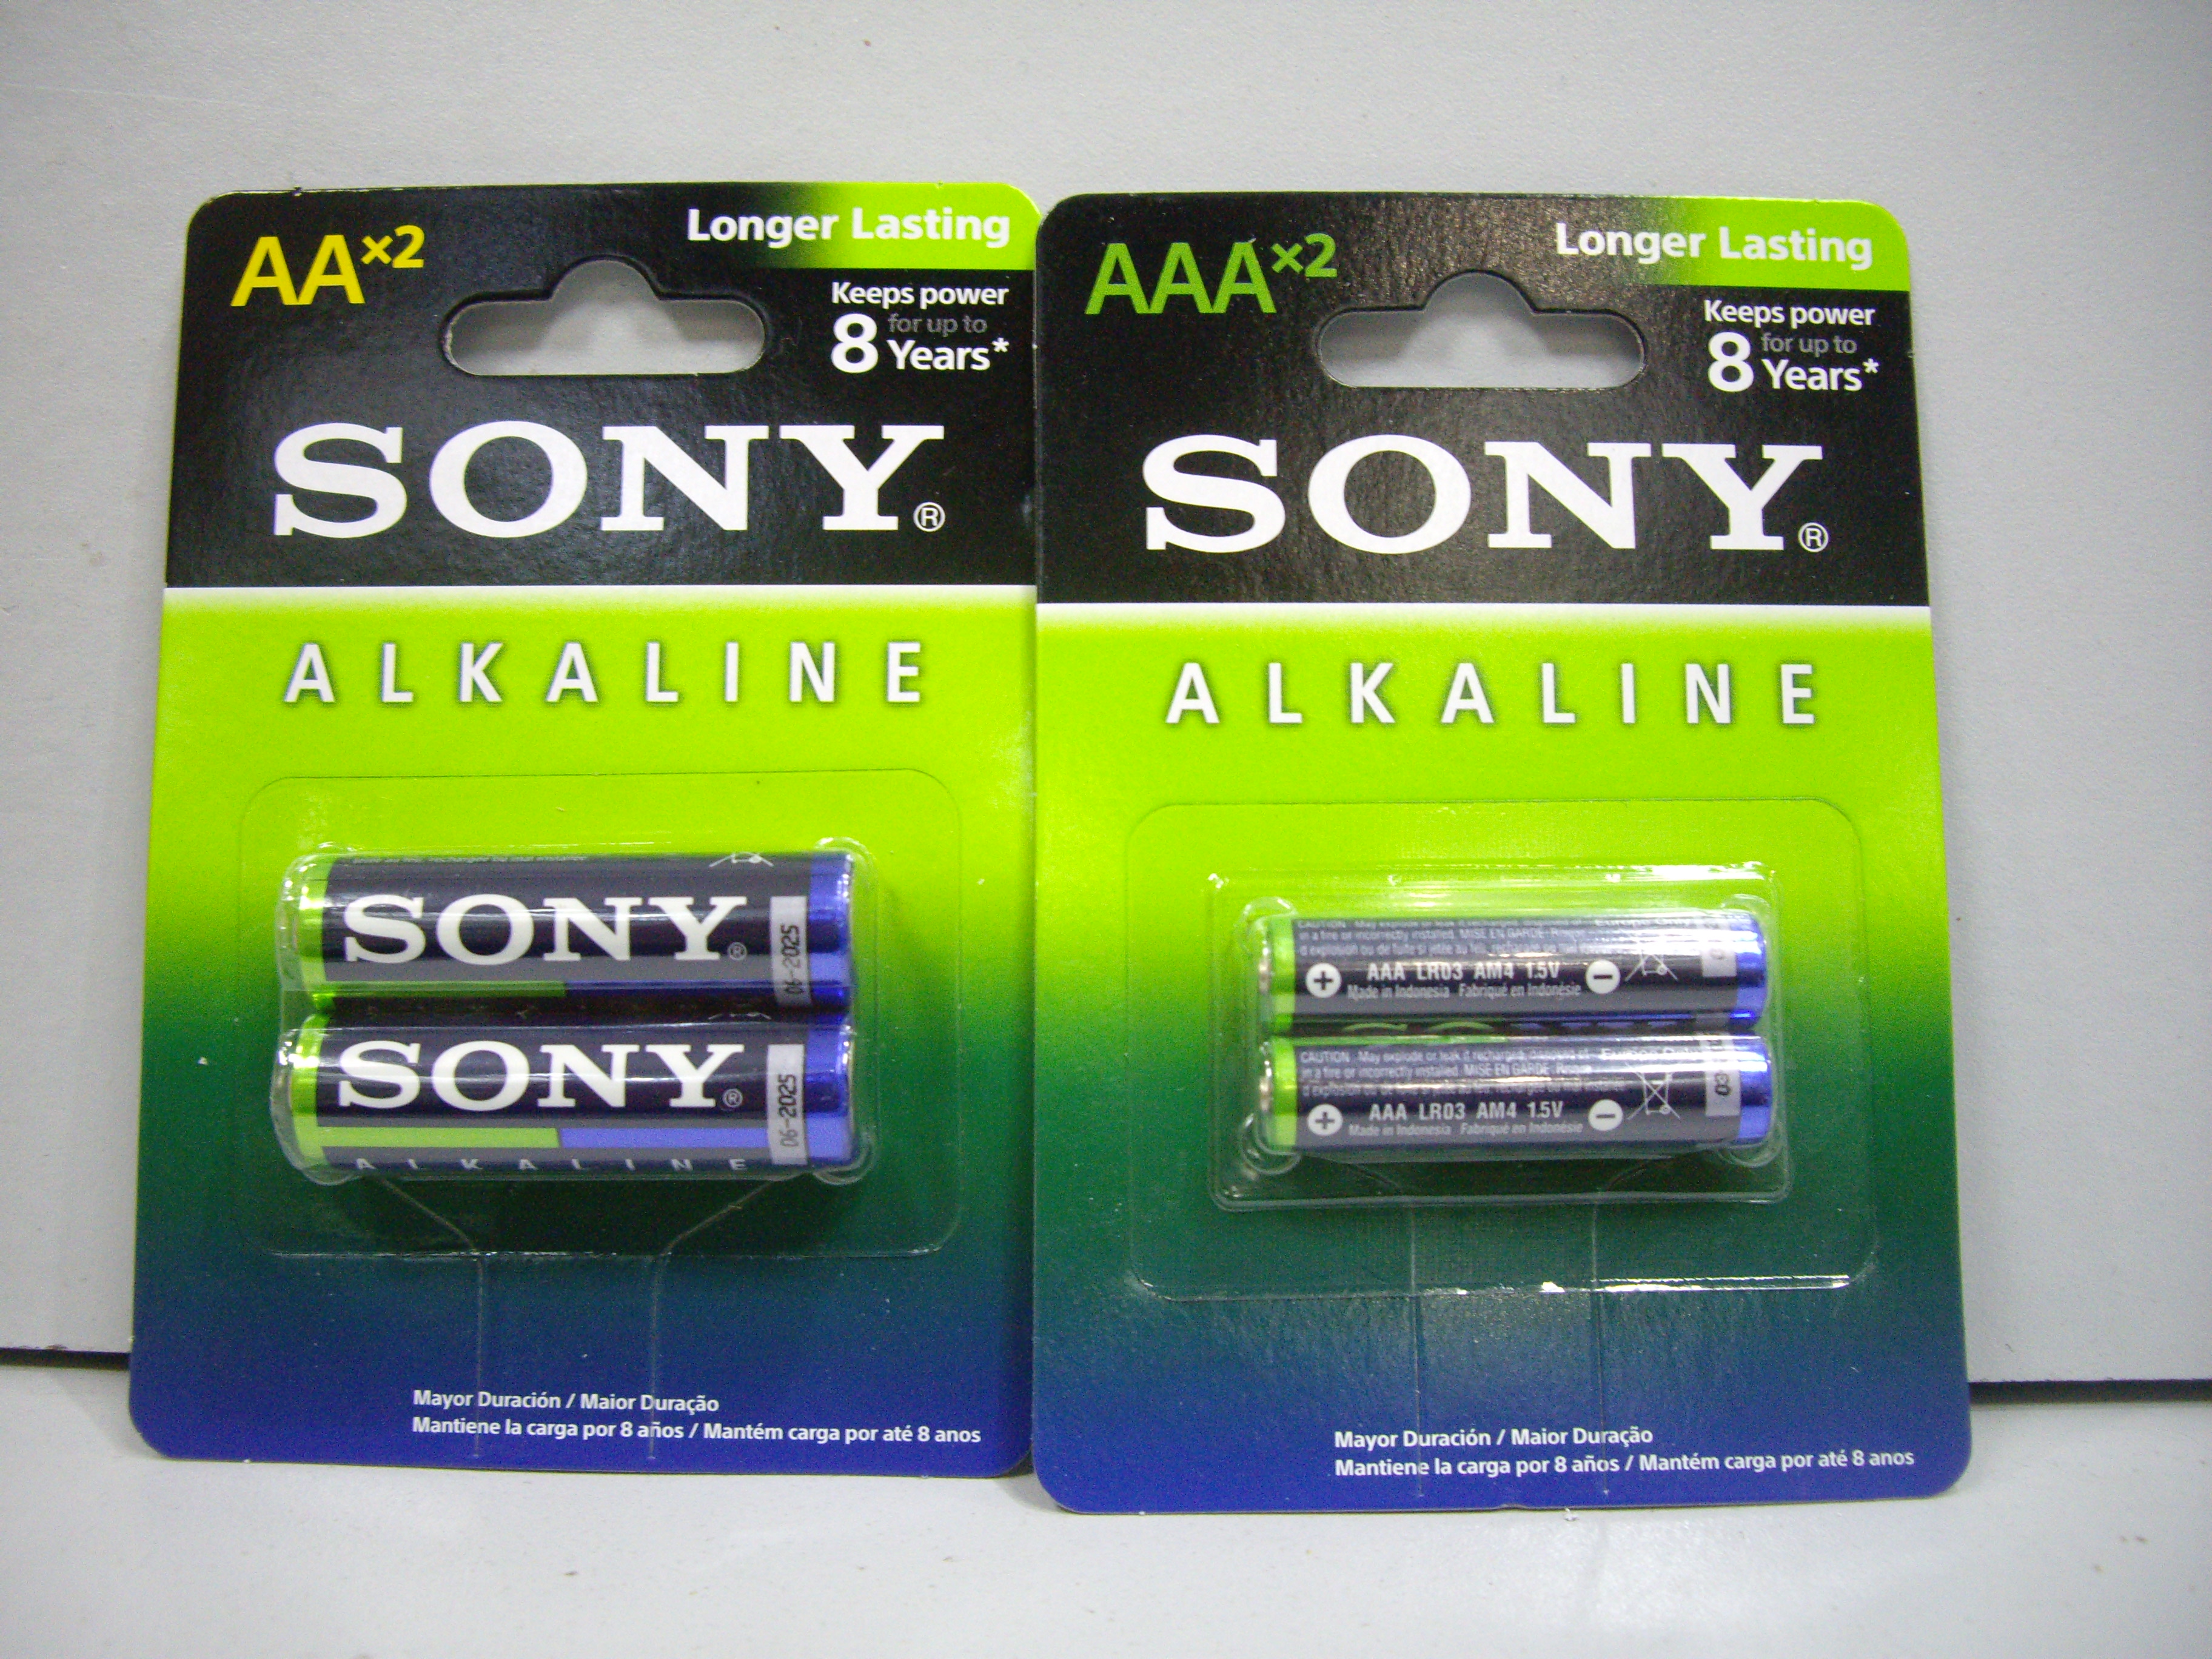 Алкалиновые  батарейки Sony
LR3(AAA), LR6(AA)
Цена 40 р/шт.